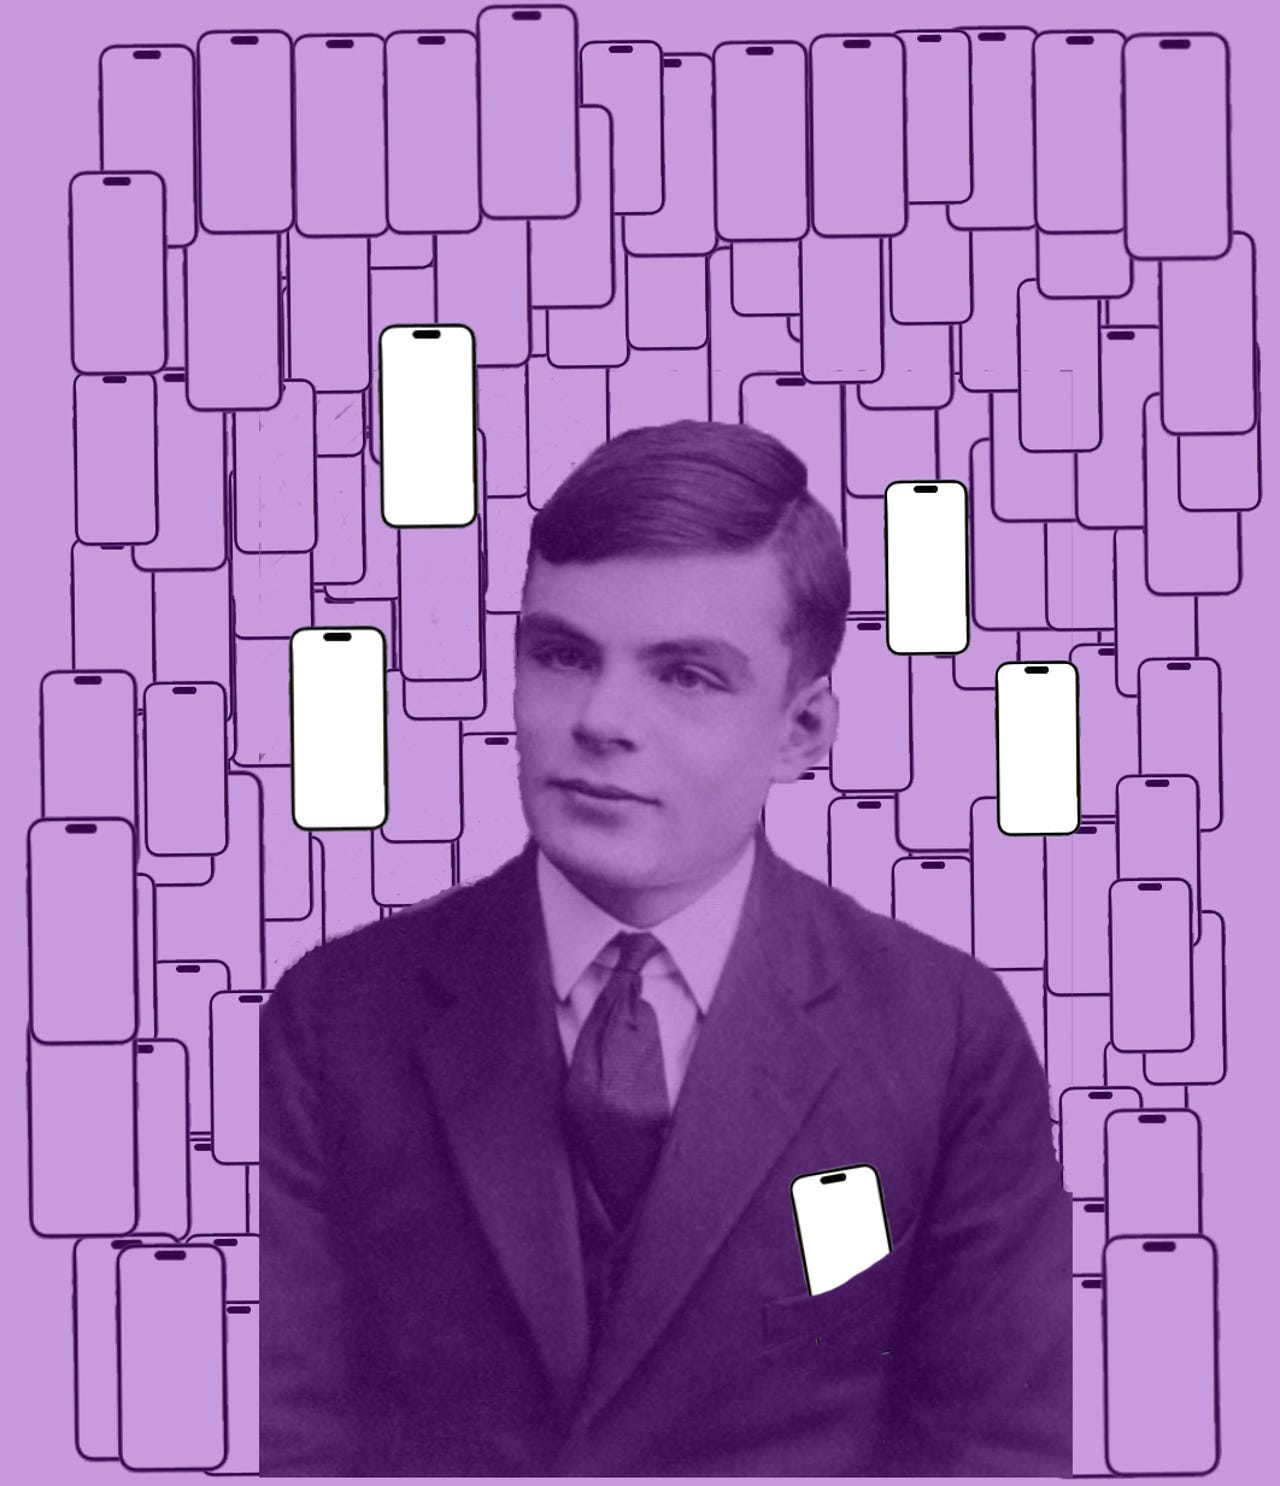 Turing's machine, Opinion